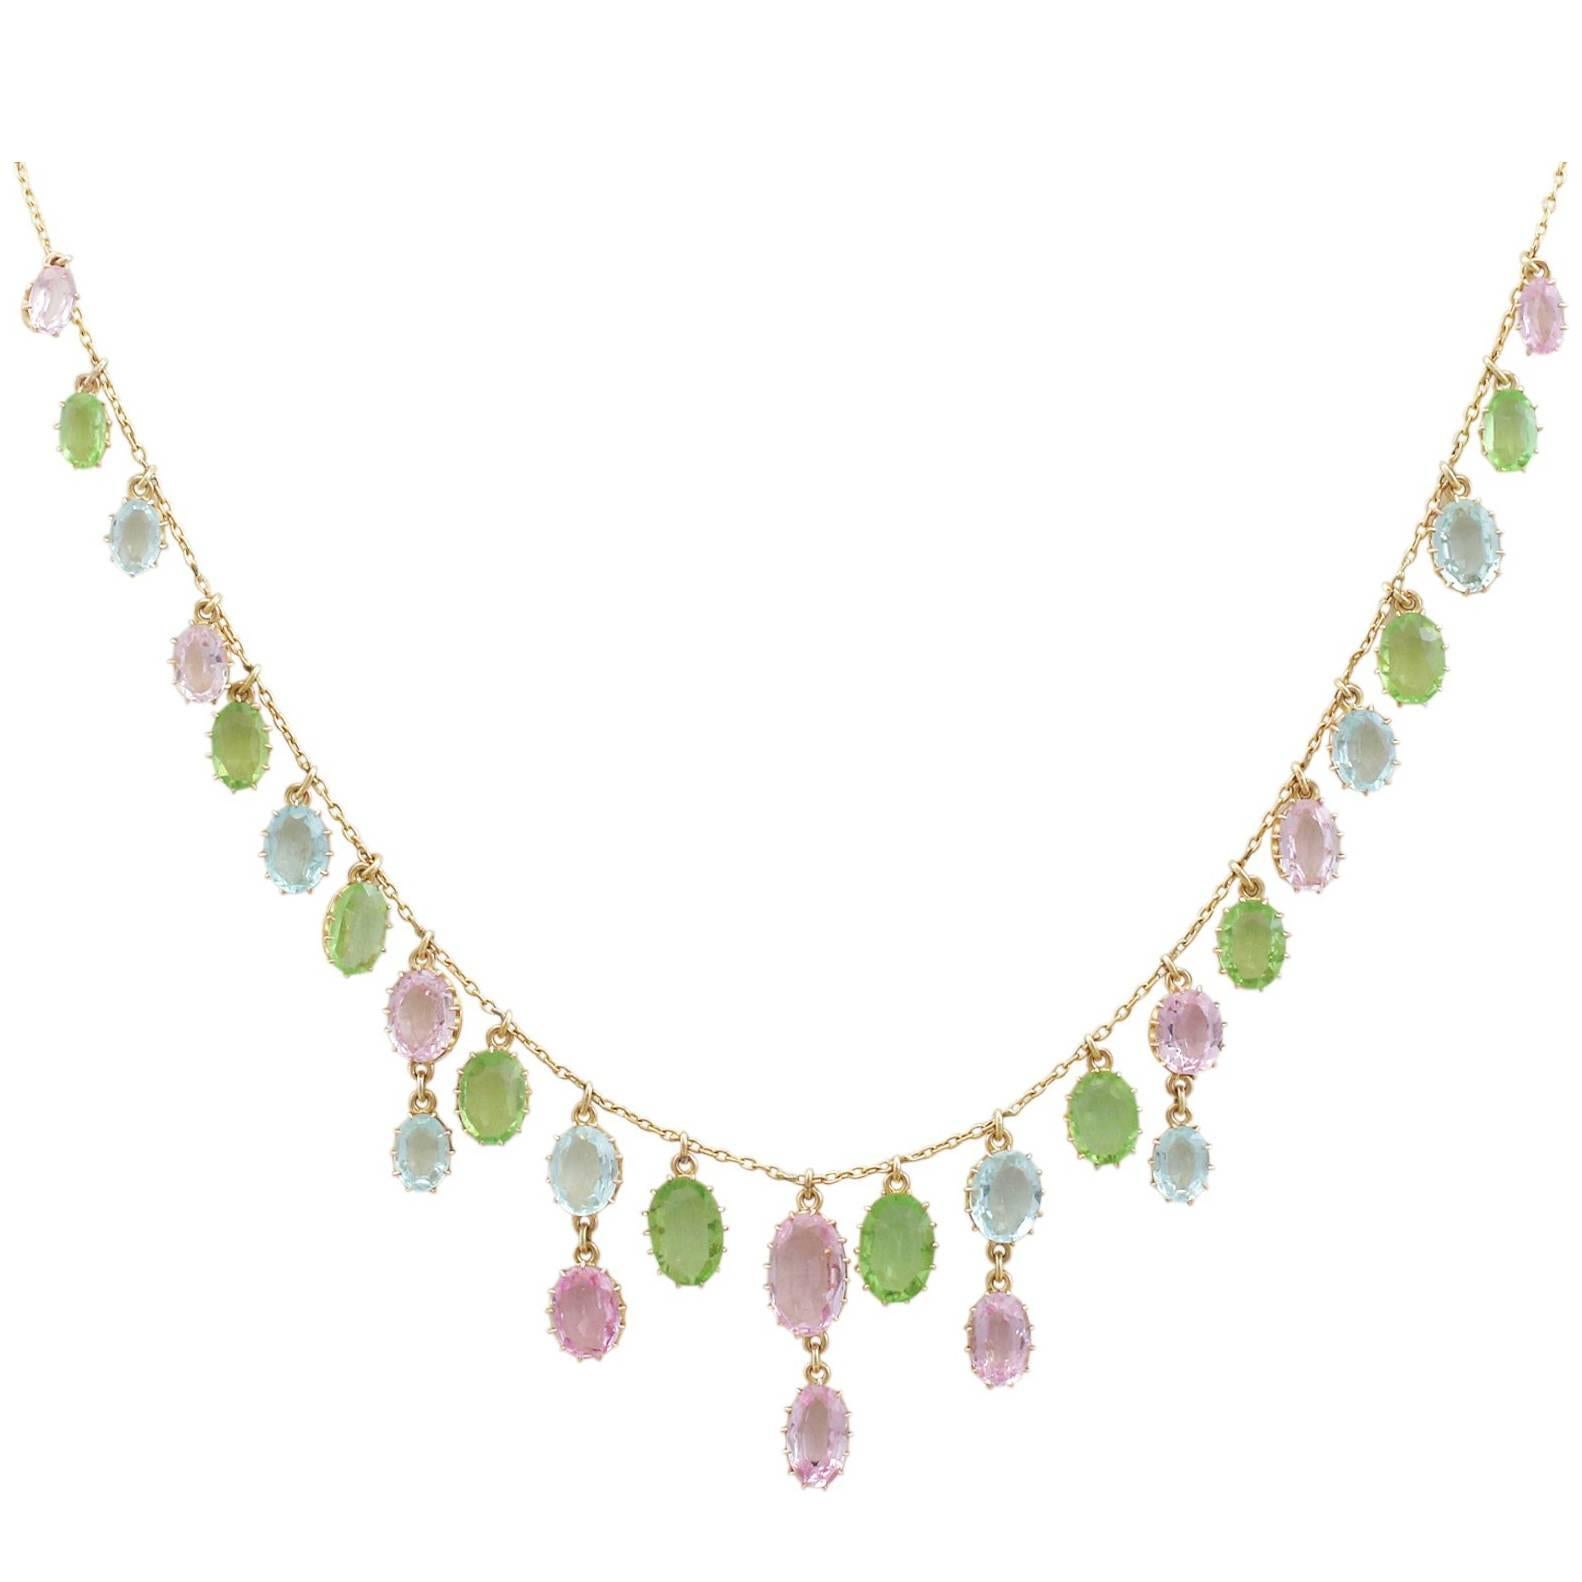 1900s 25.87 Ct Rose Quartz Peridot, Aquamarine and 18k Yellow Gold Necklace